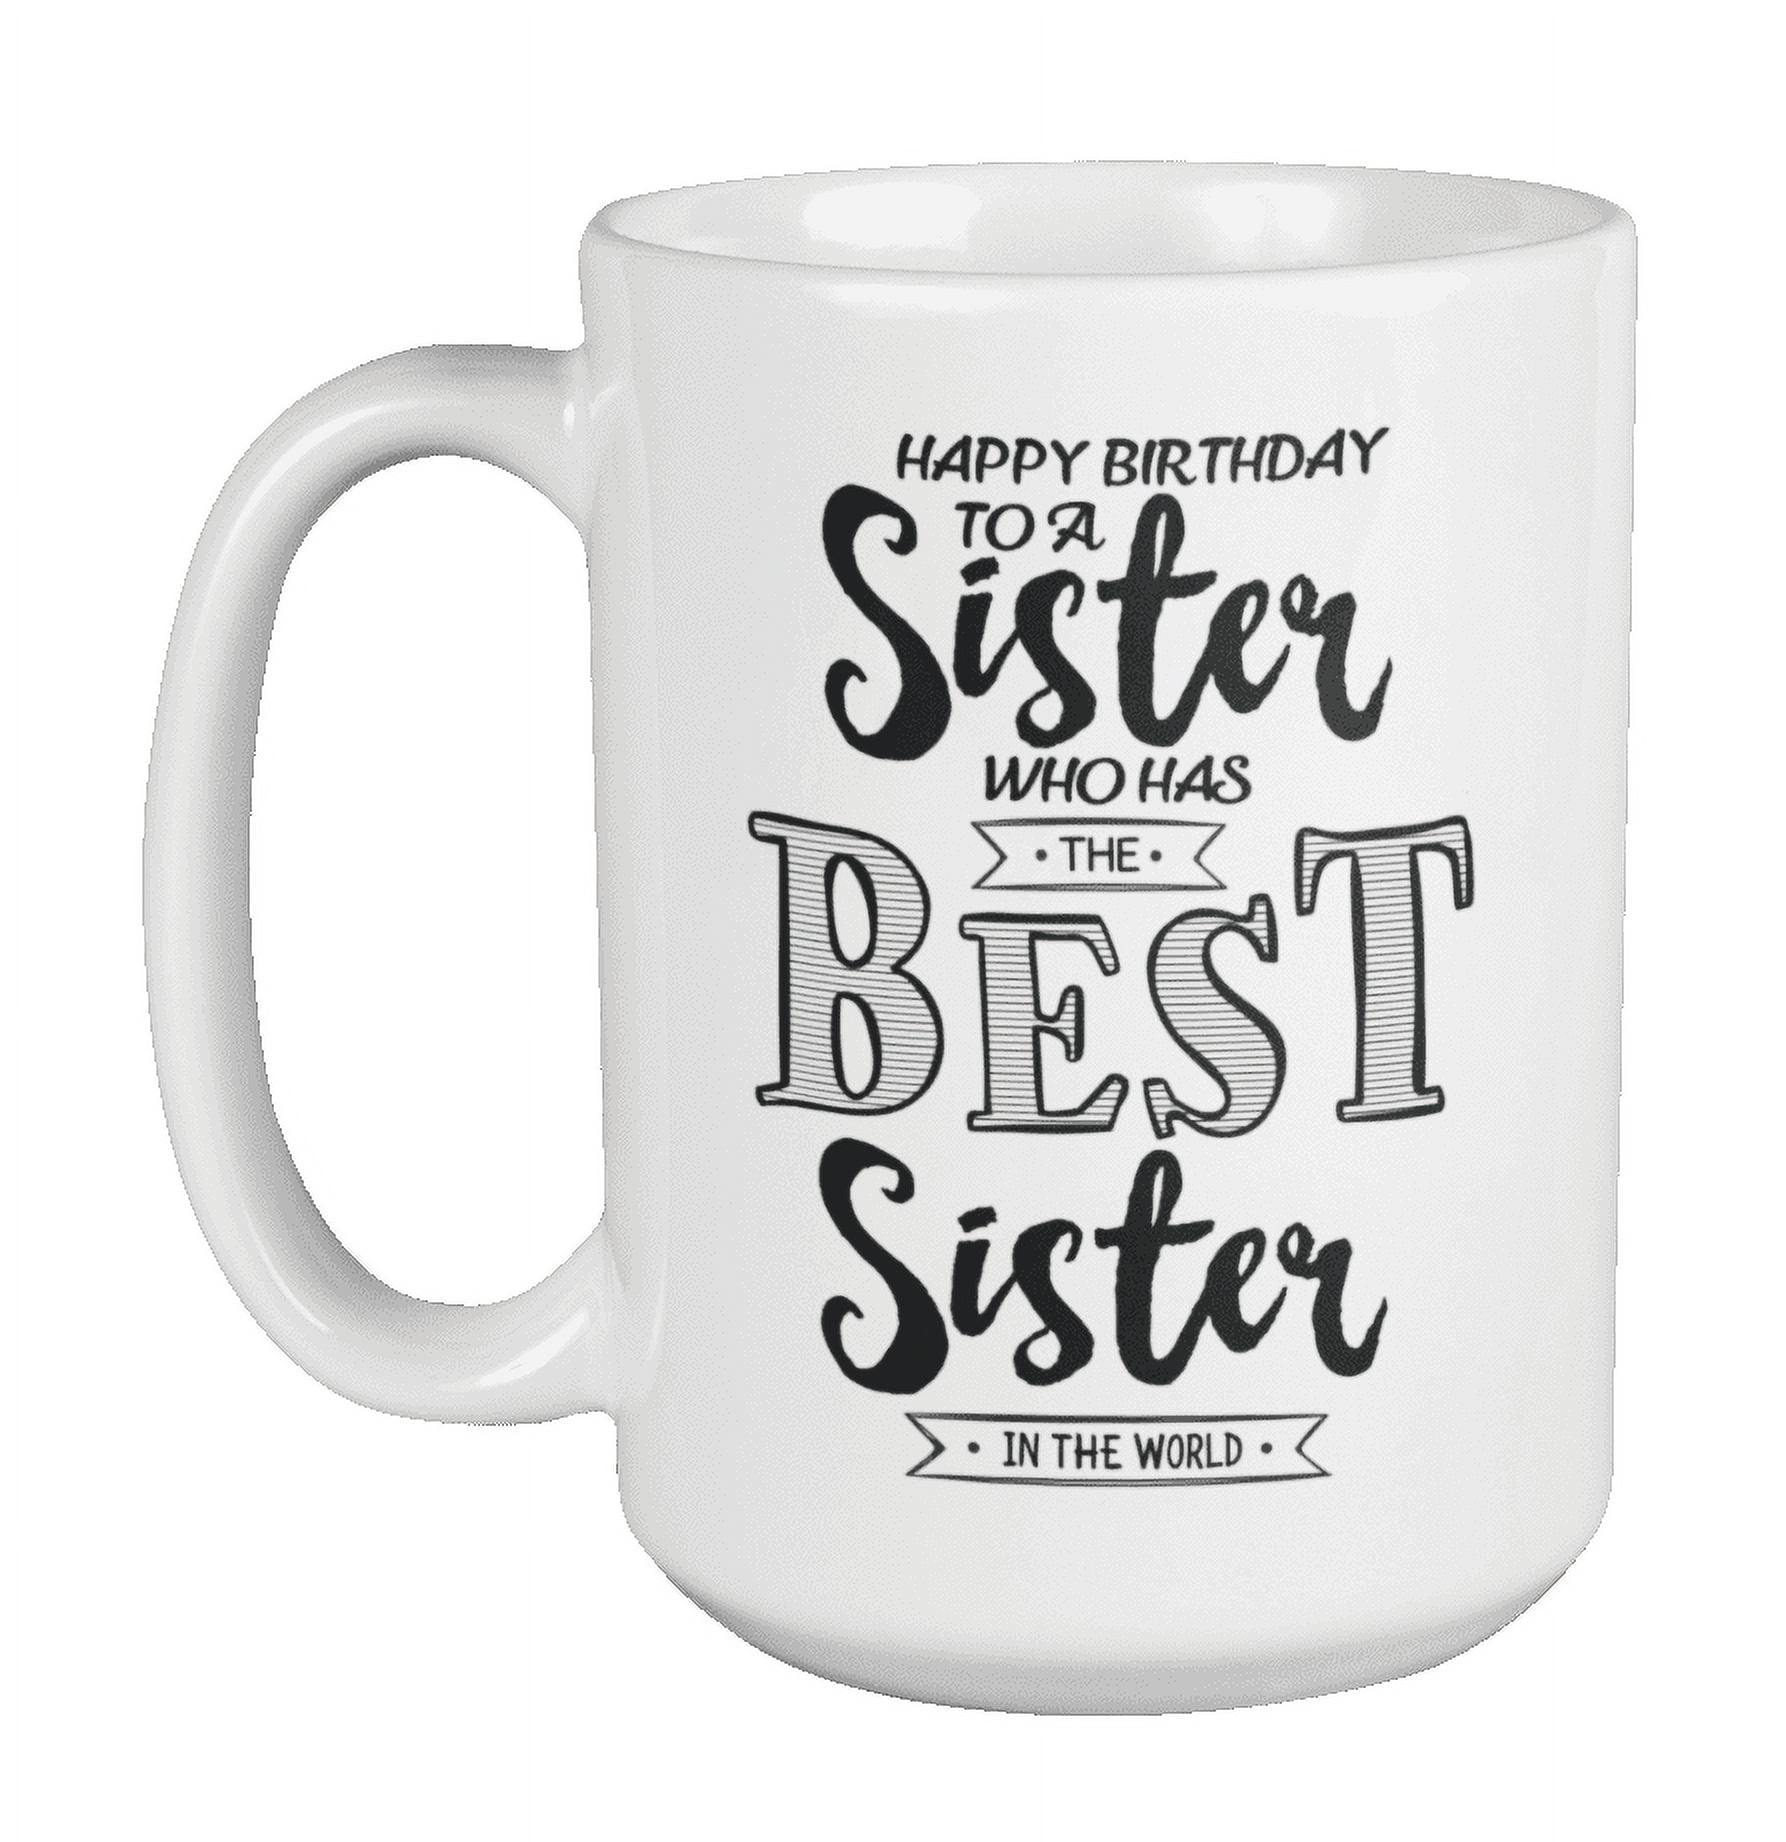 Best Sister Ever Mug, Funny Coffee Cup, Cute Coffee Mugs